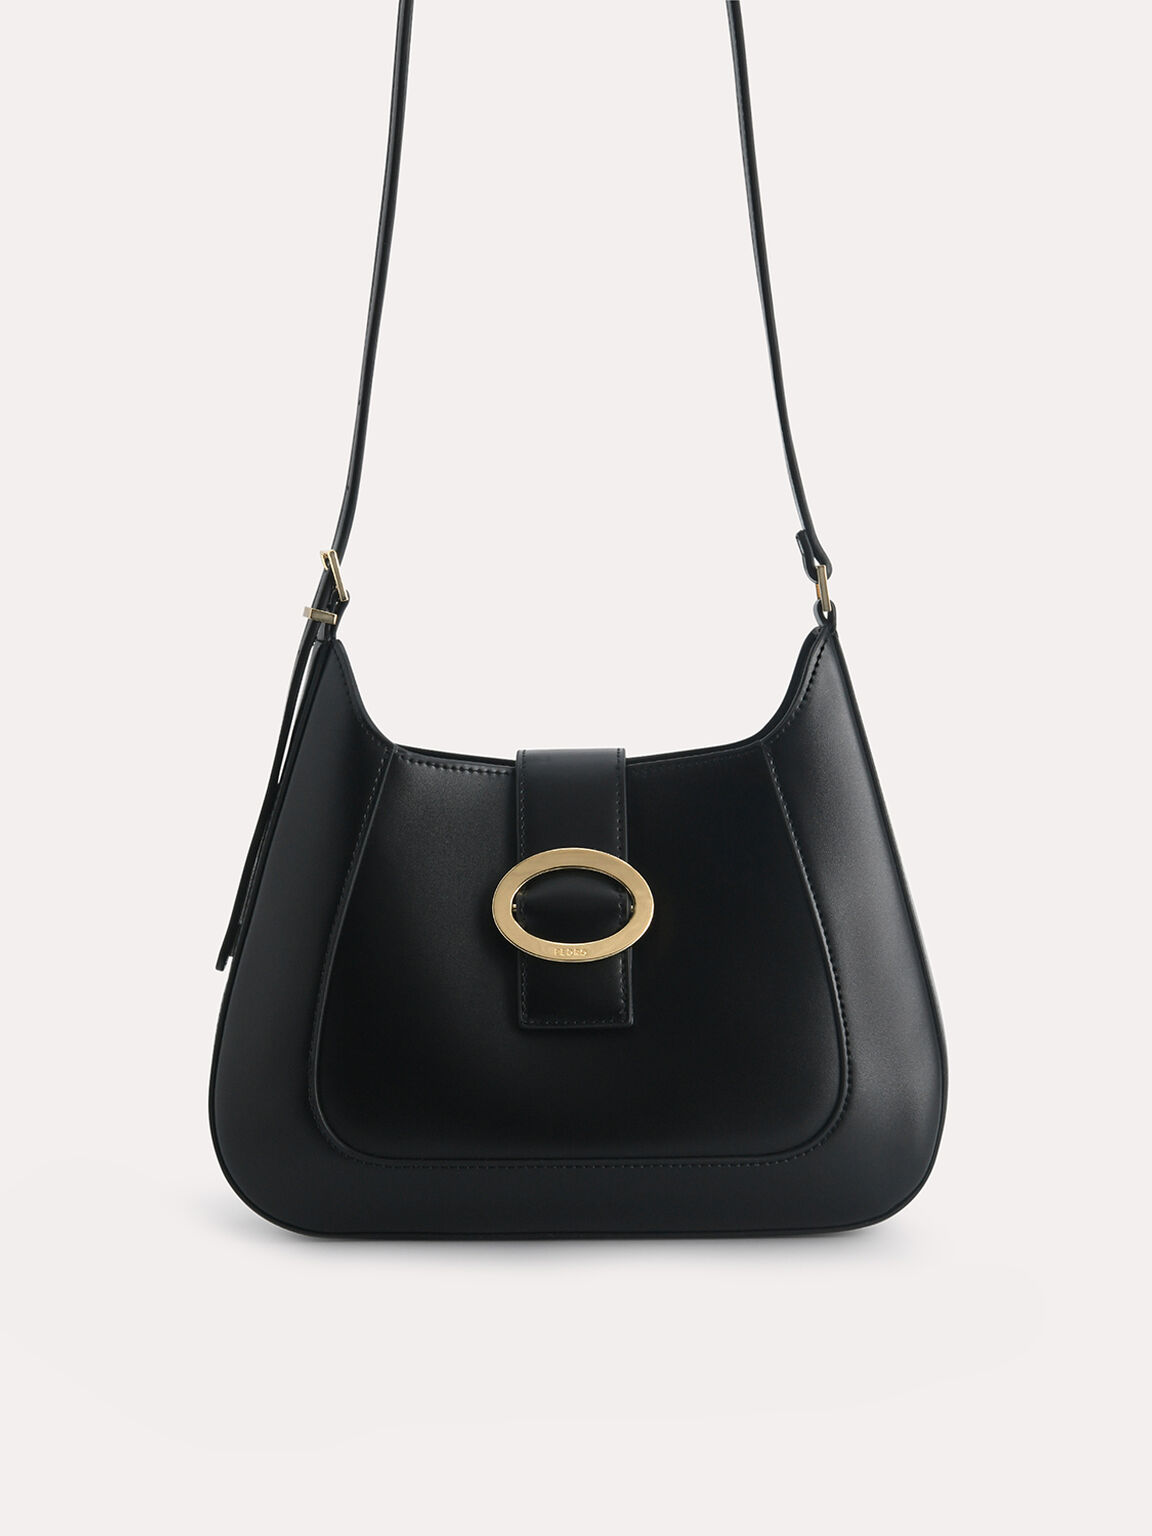 Top Handle Bag with Oval Buckle, Black, hi-res